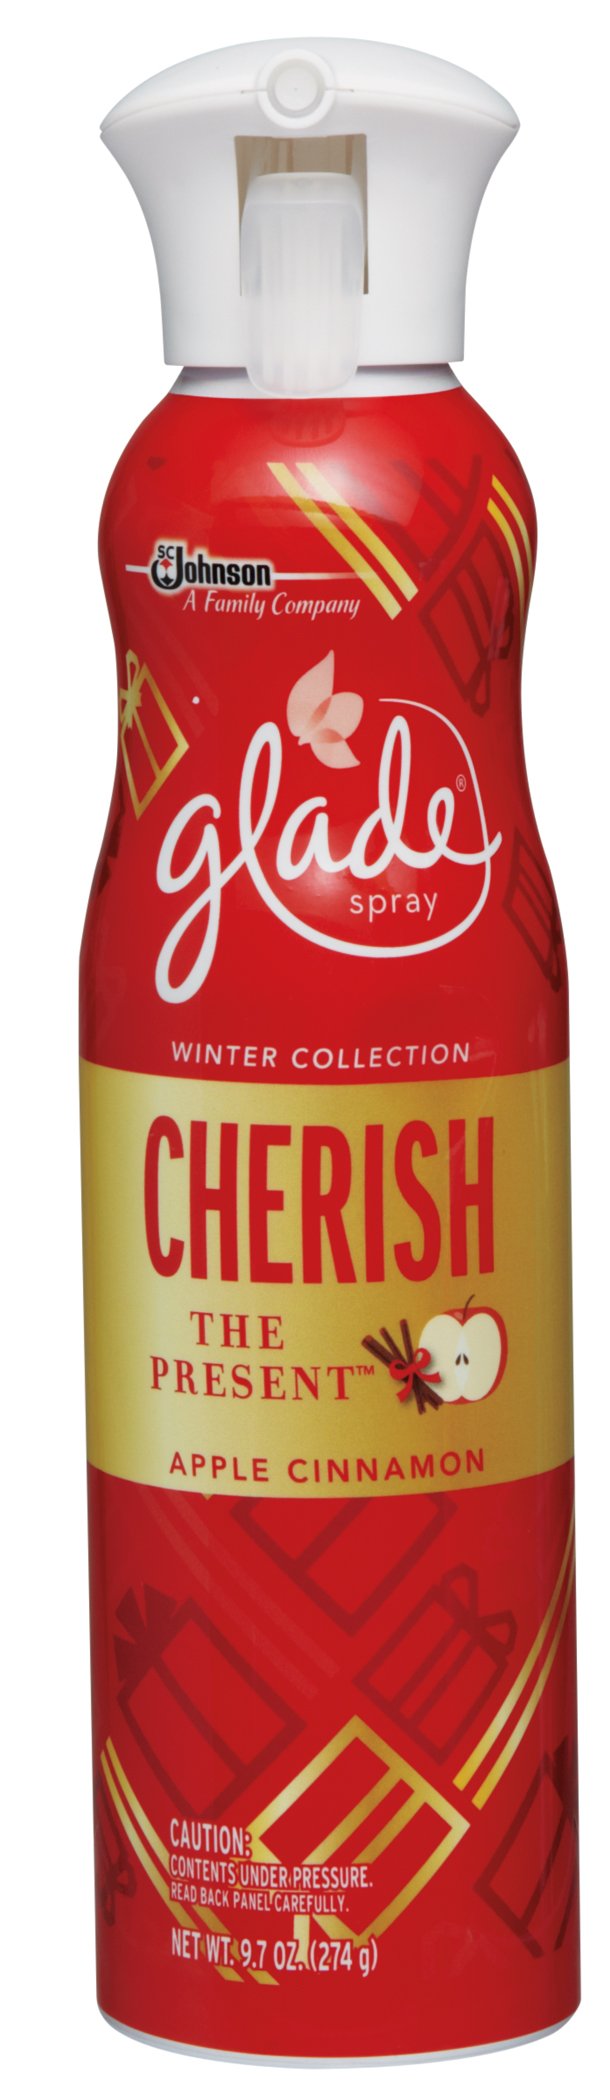 Glade Spray, Cherish the Present: Apple Cinnamon - Shop Air Fresheners at  H-E-B